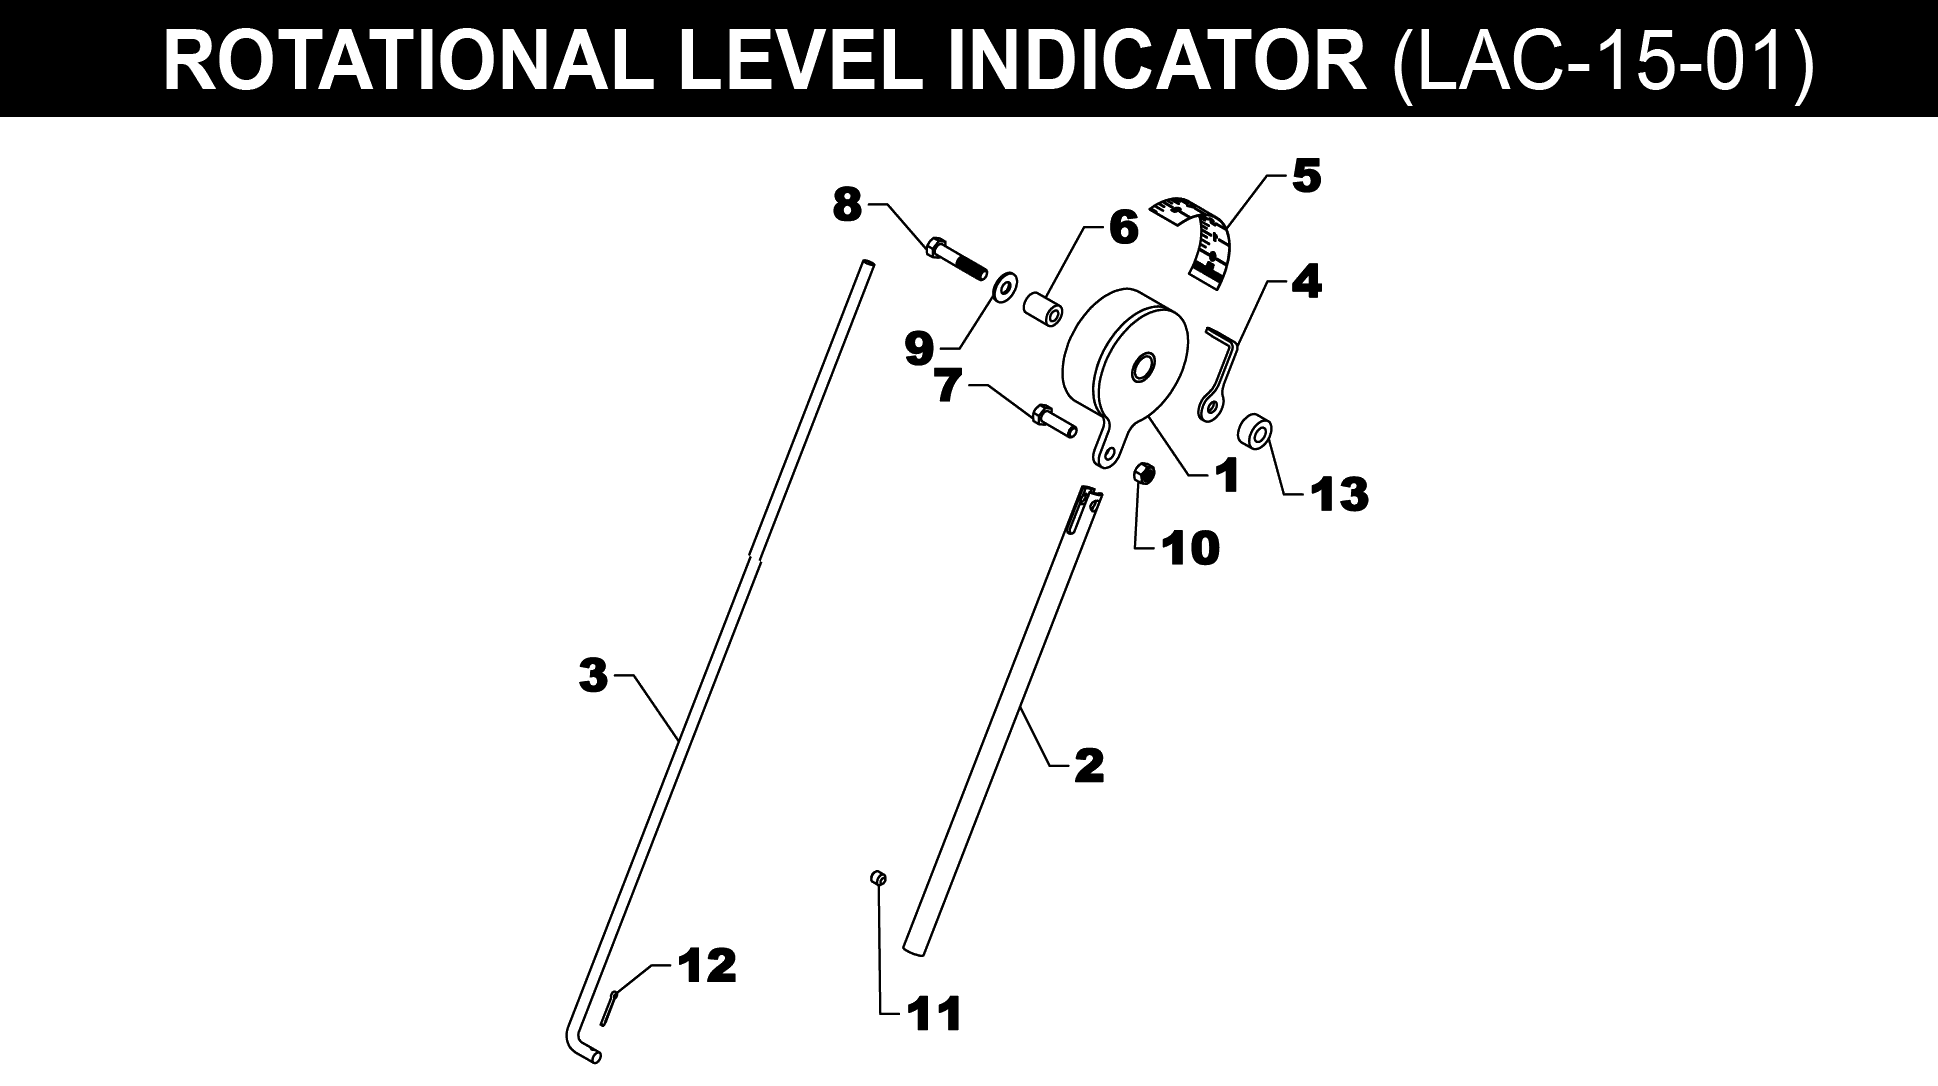 Bucket Indicator - LAC-15-01